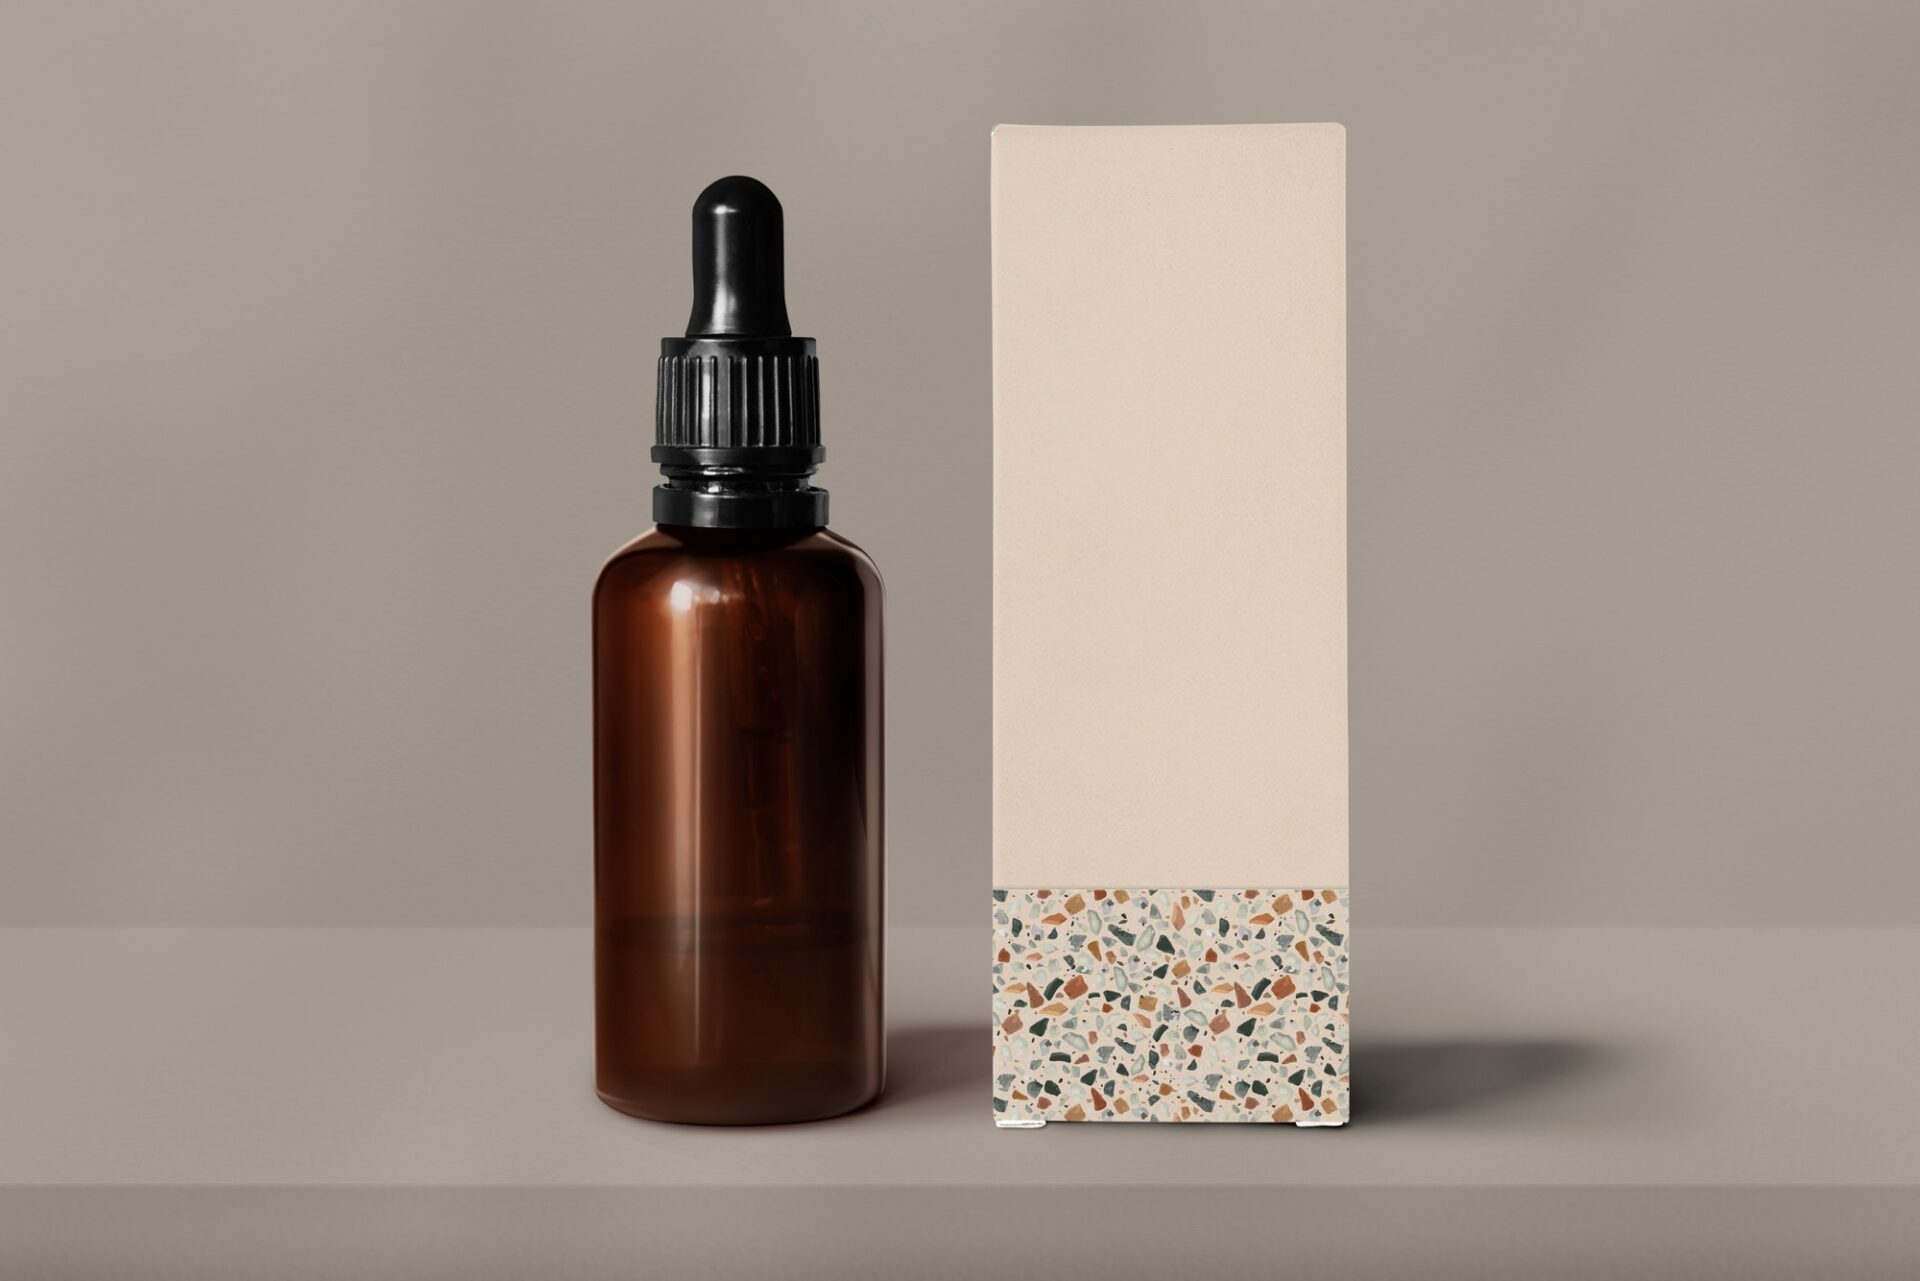 Brown glass dropper bottle, beige paper box, beauty product packaging